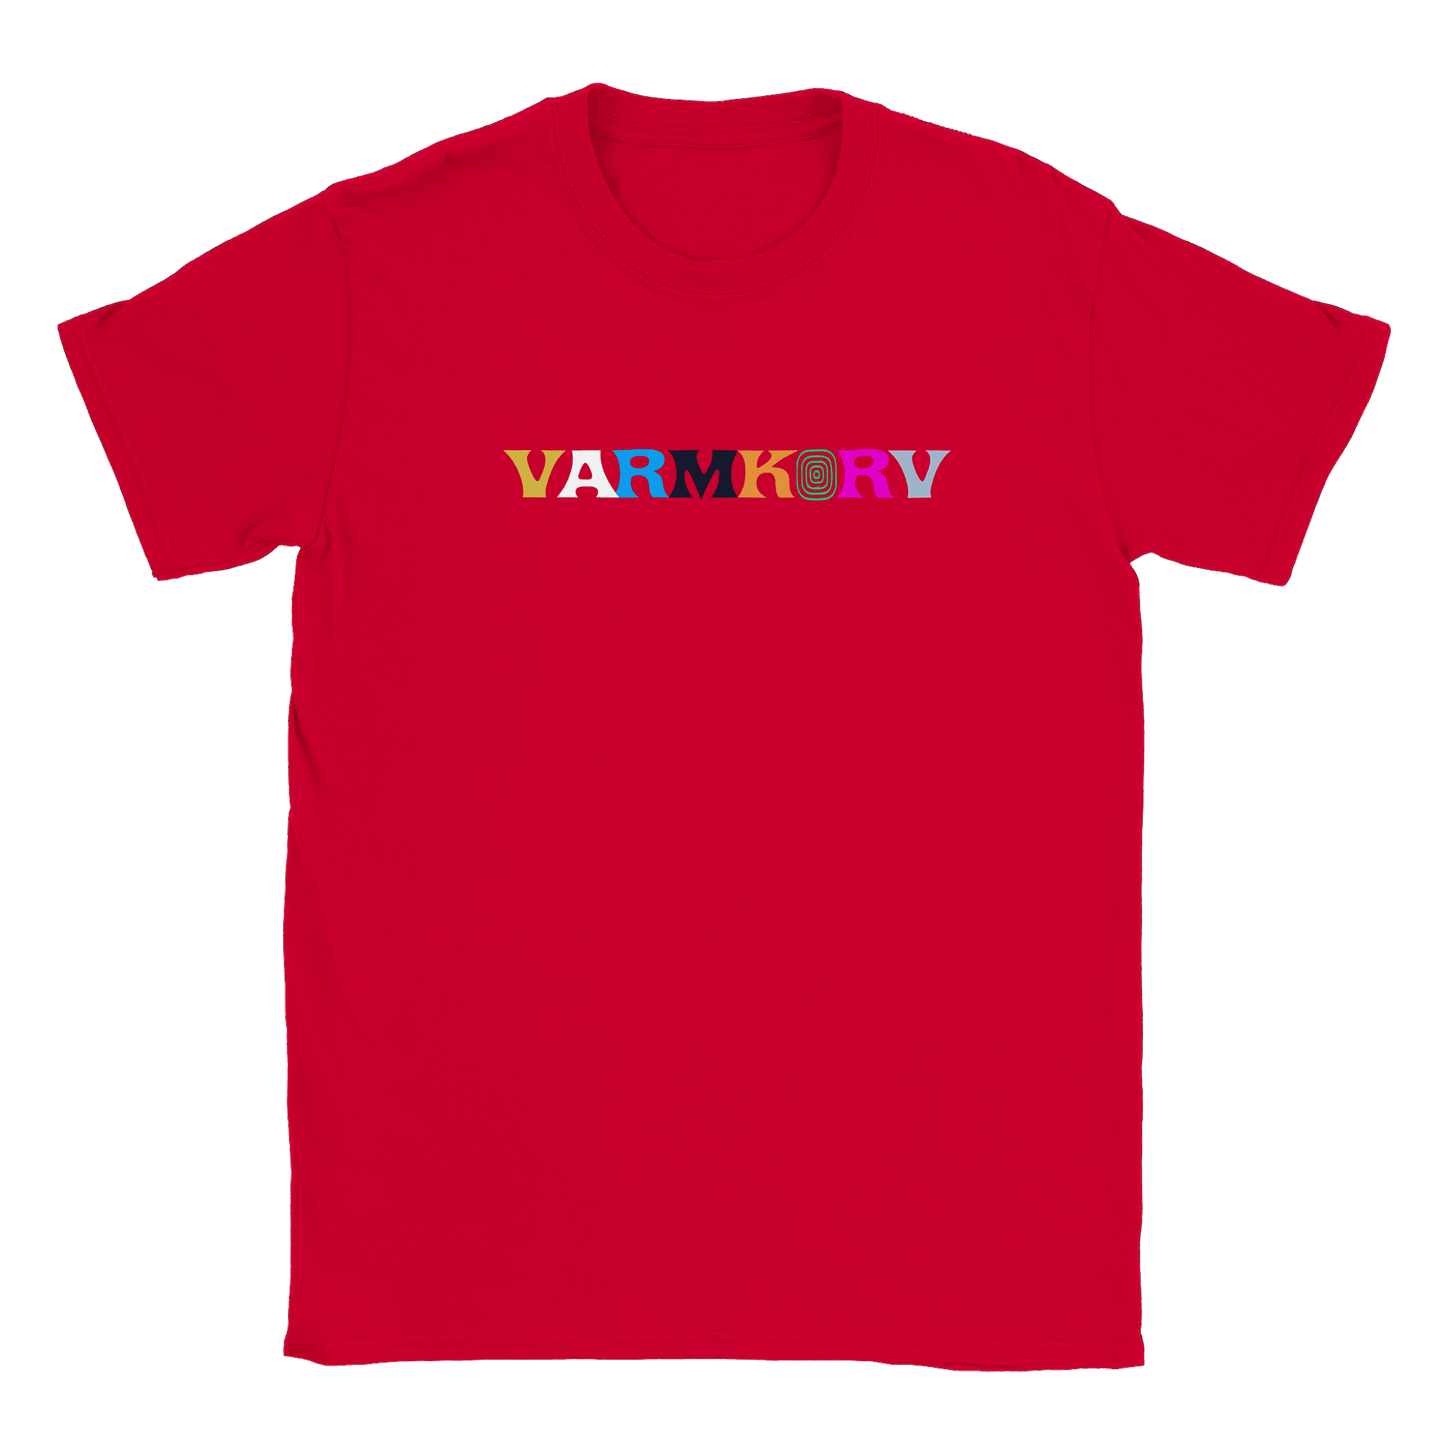 Varmkorv - T-shirt Röd